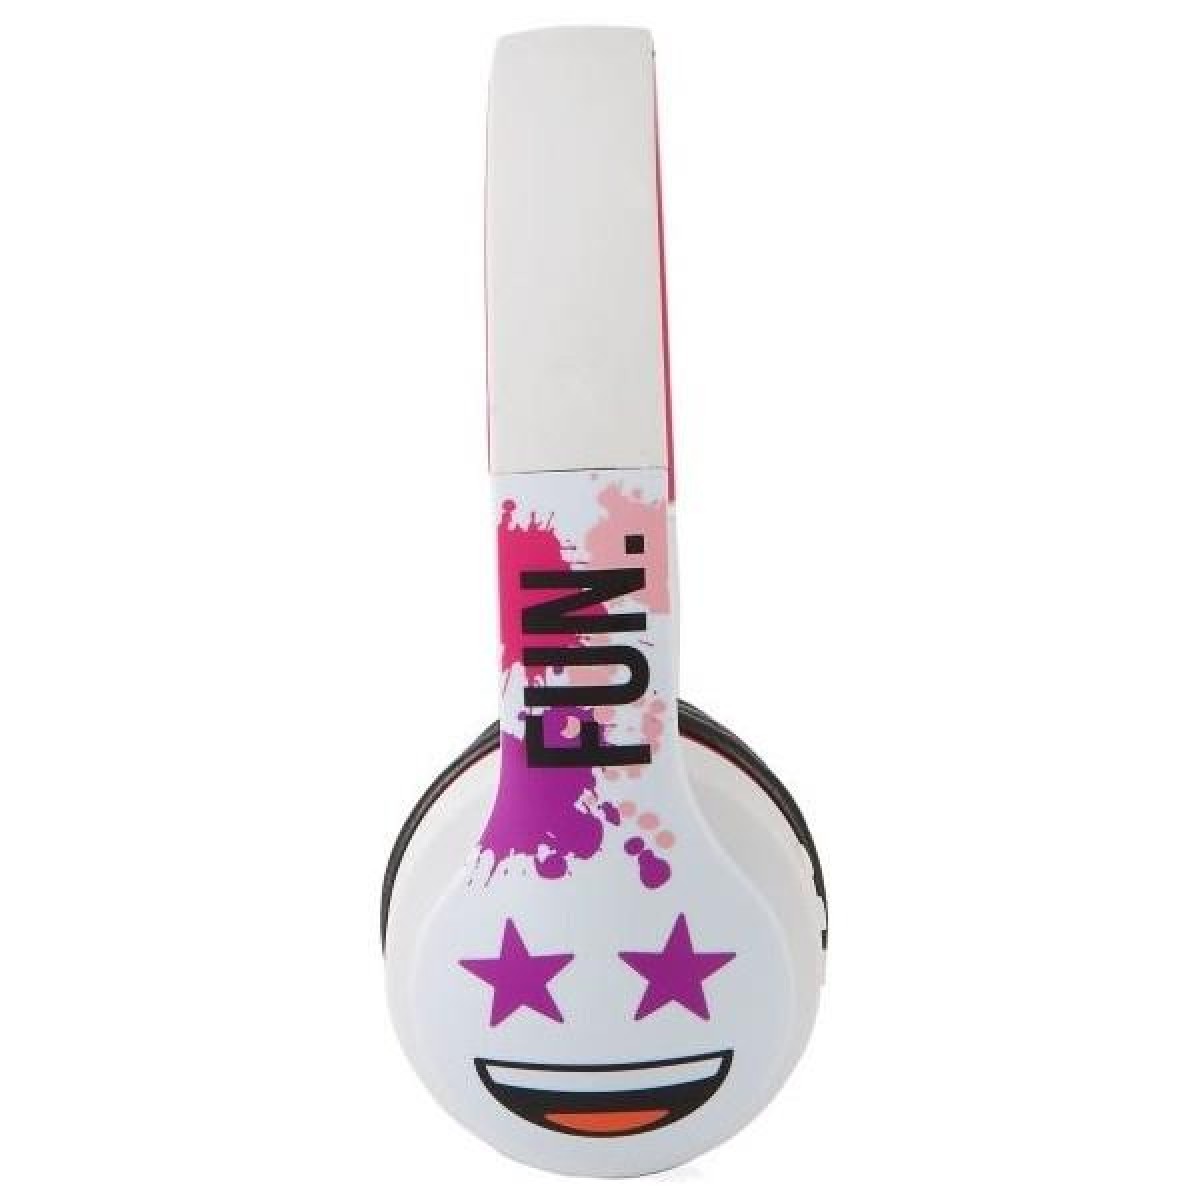 Emoji Bluetooth Headphones Fun Pink